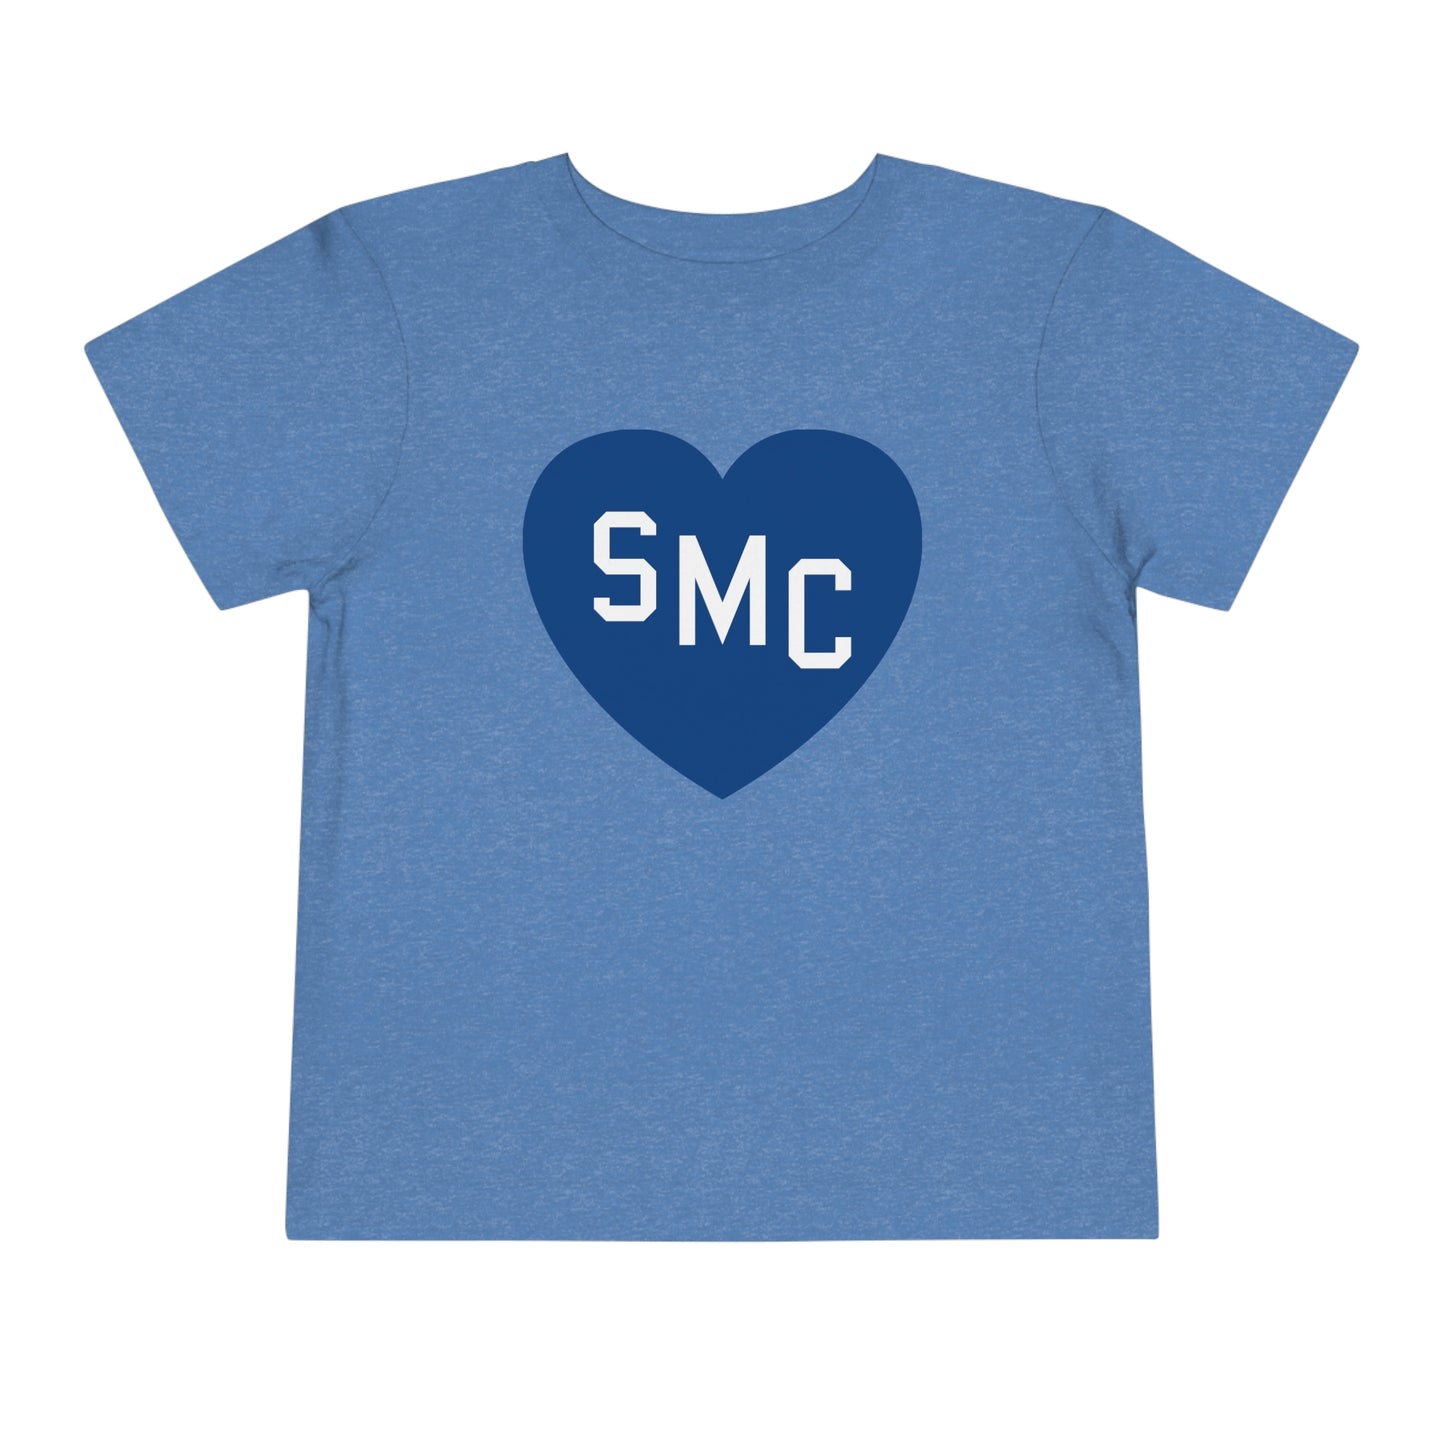 SMC Heart Toddler Tee